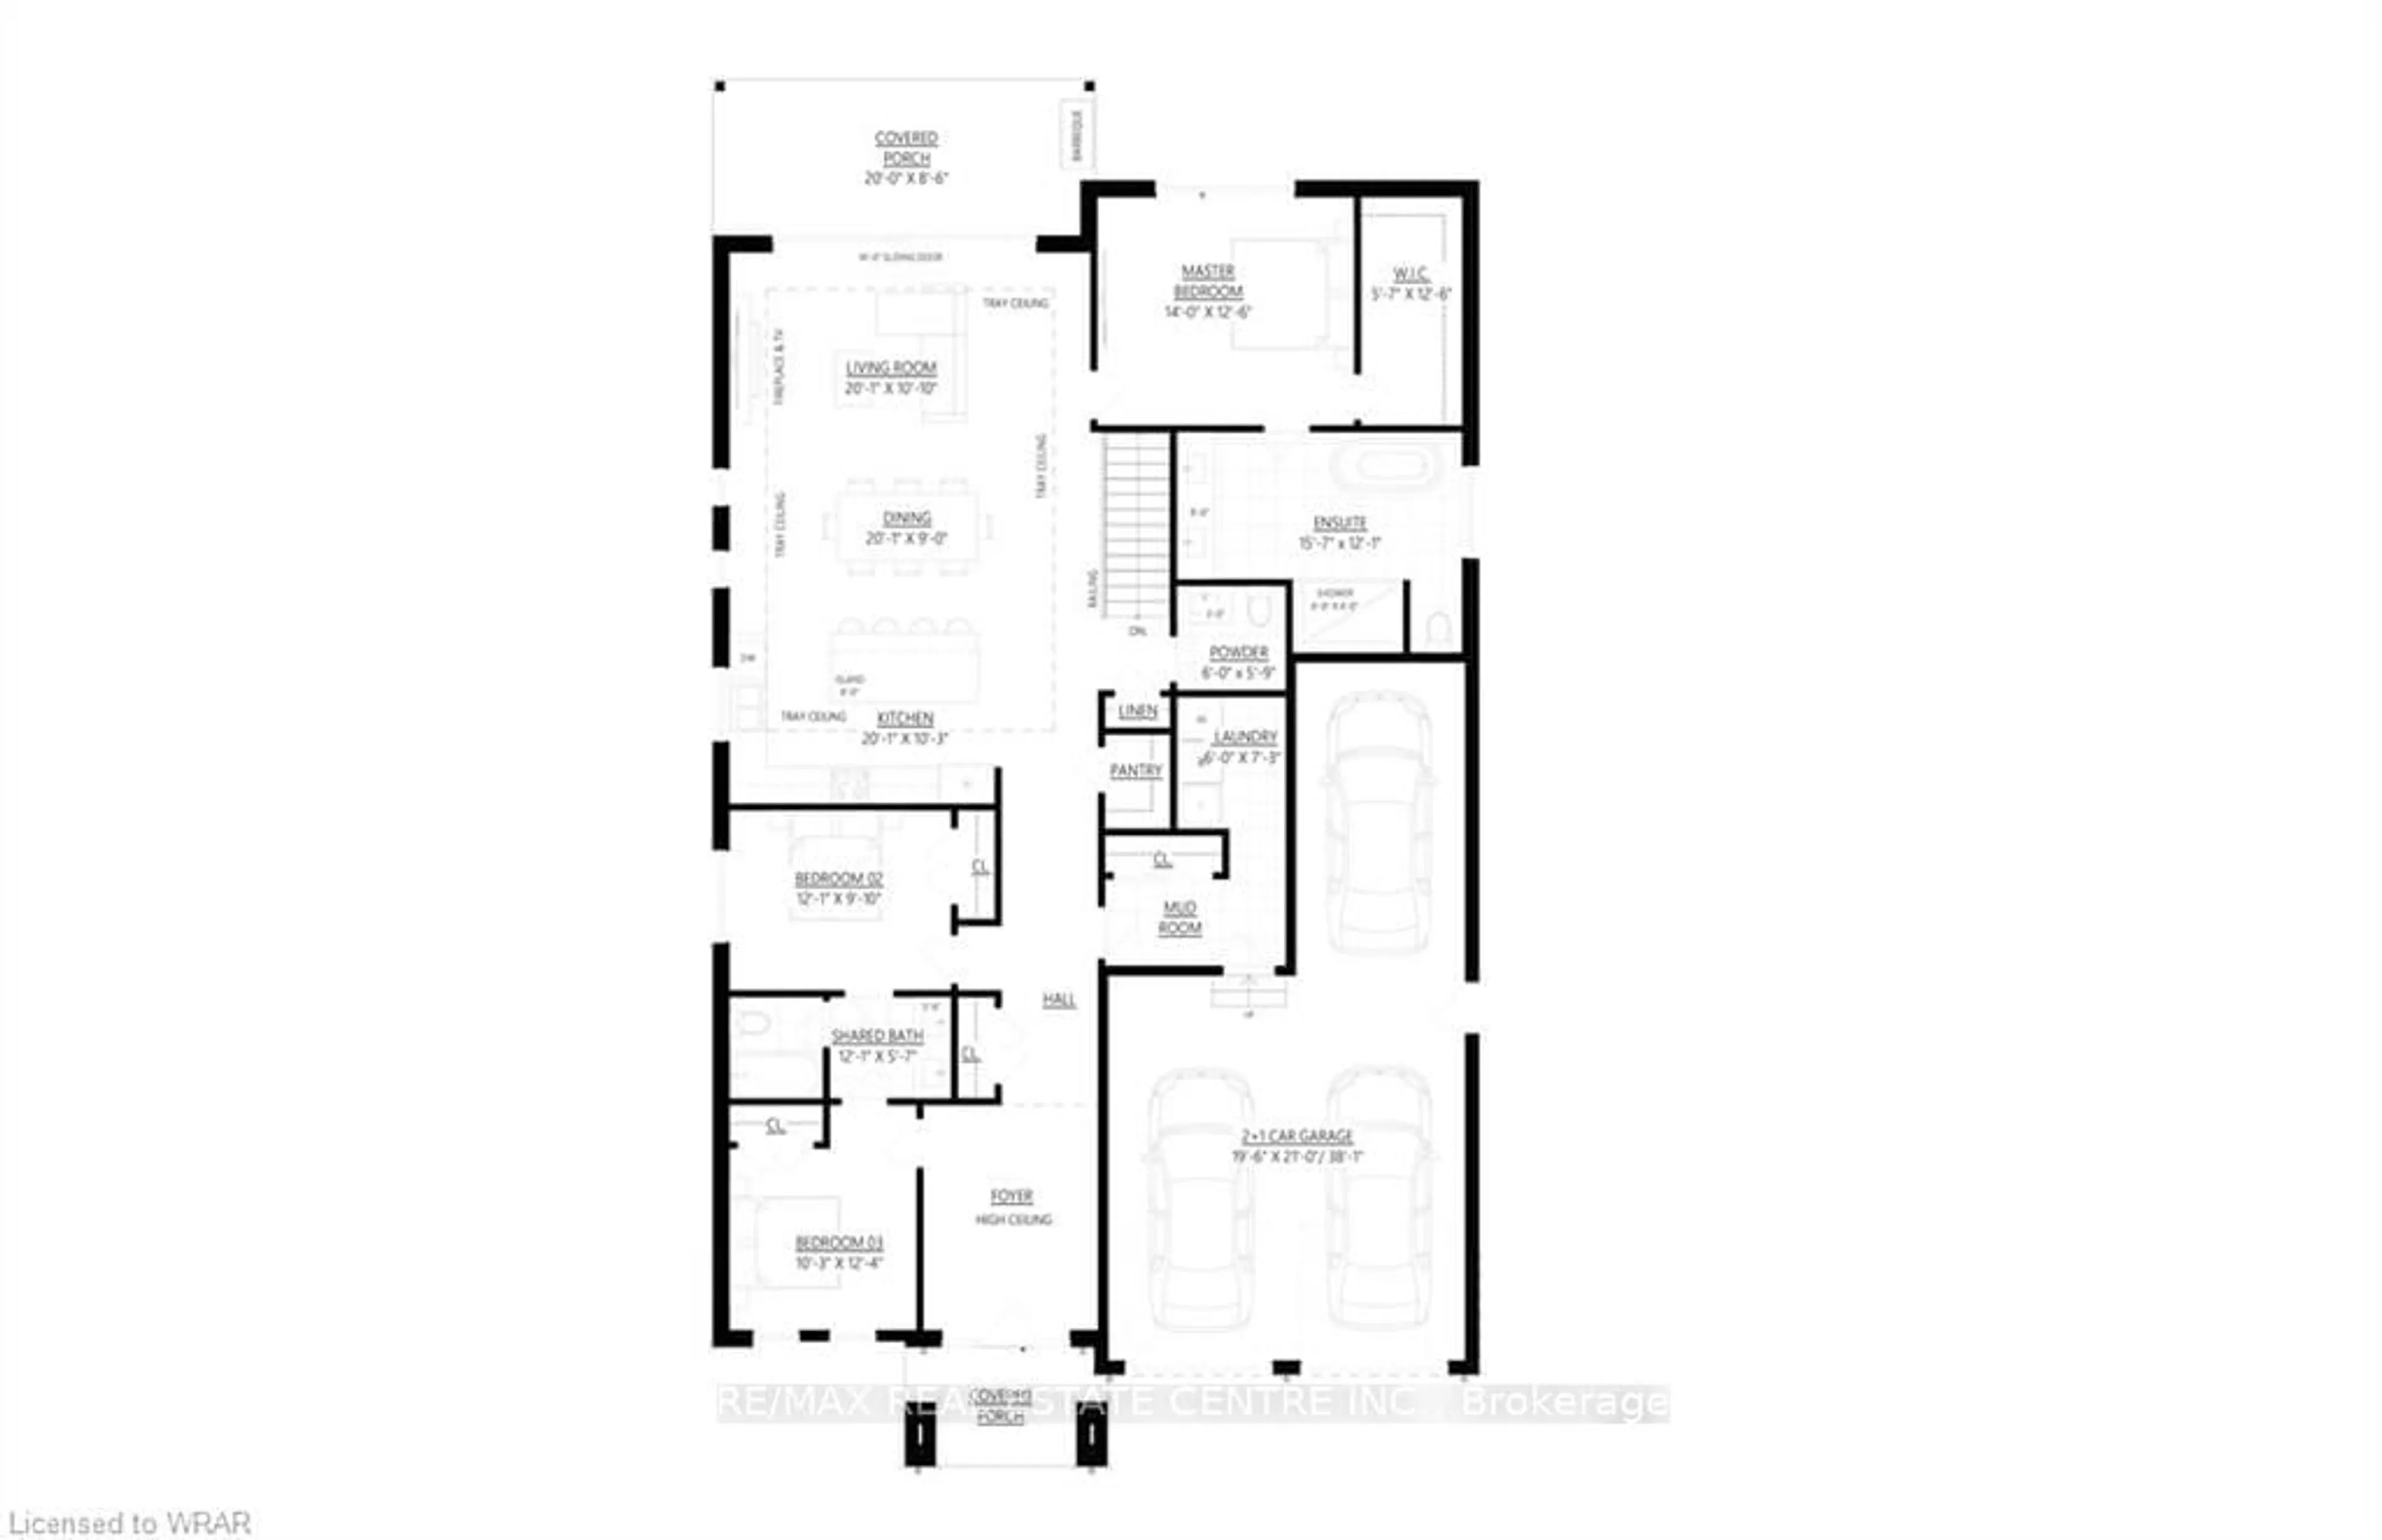 Floor plan for Lot 13 Eleanor Ave, Cambridge Ontario N3H 4N4